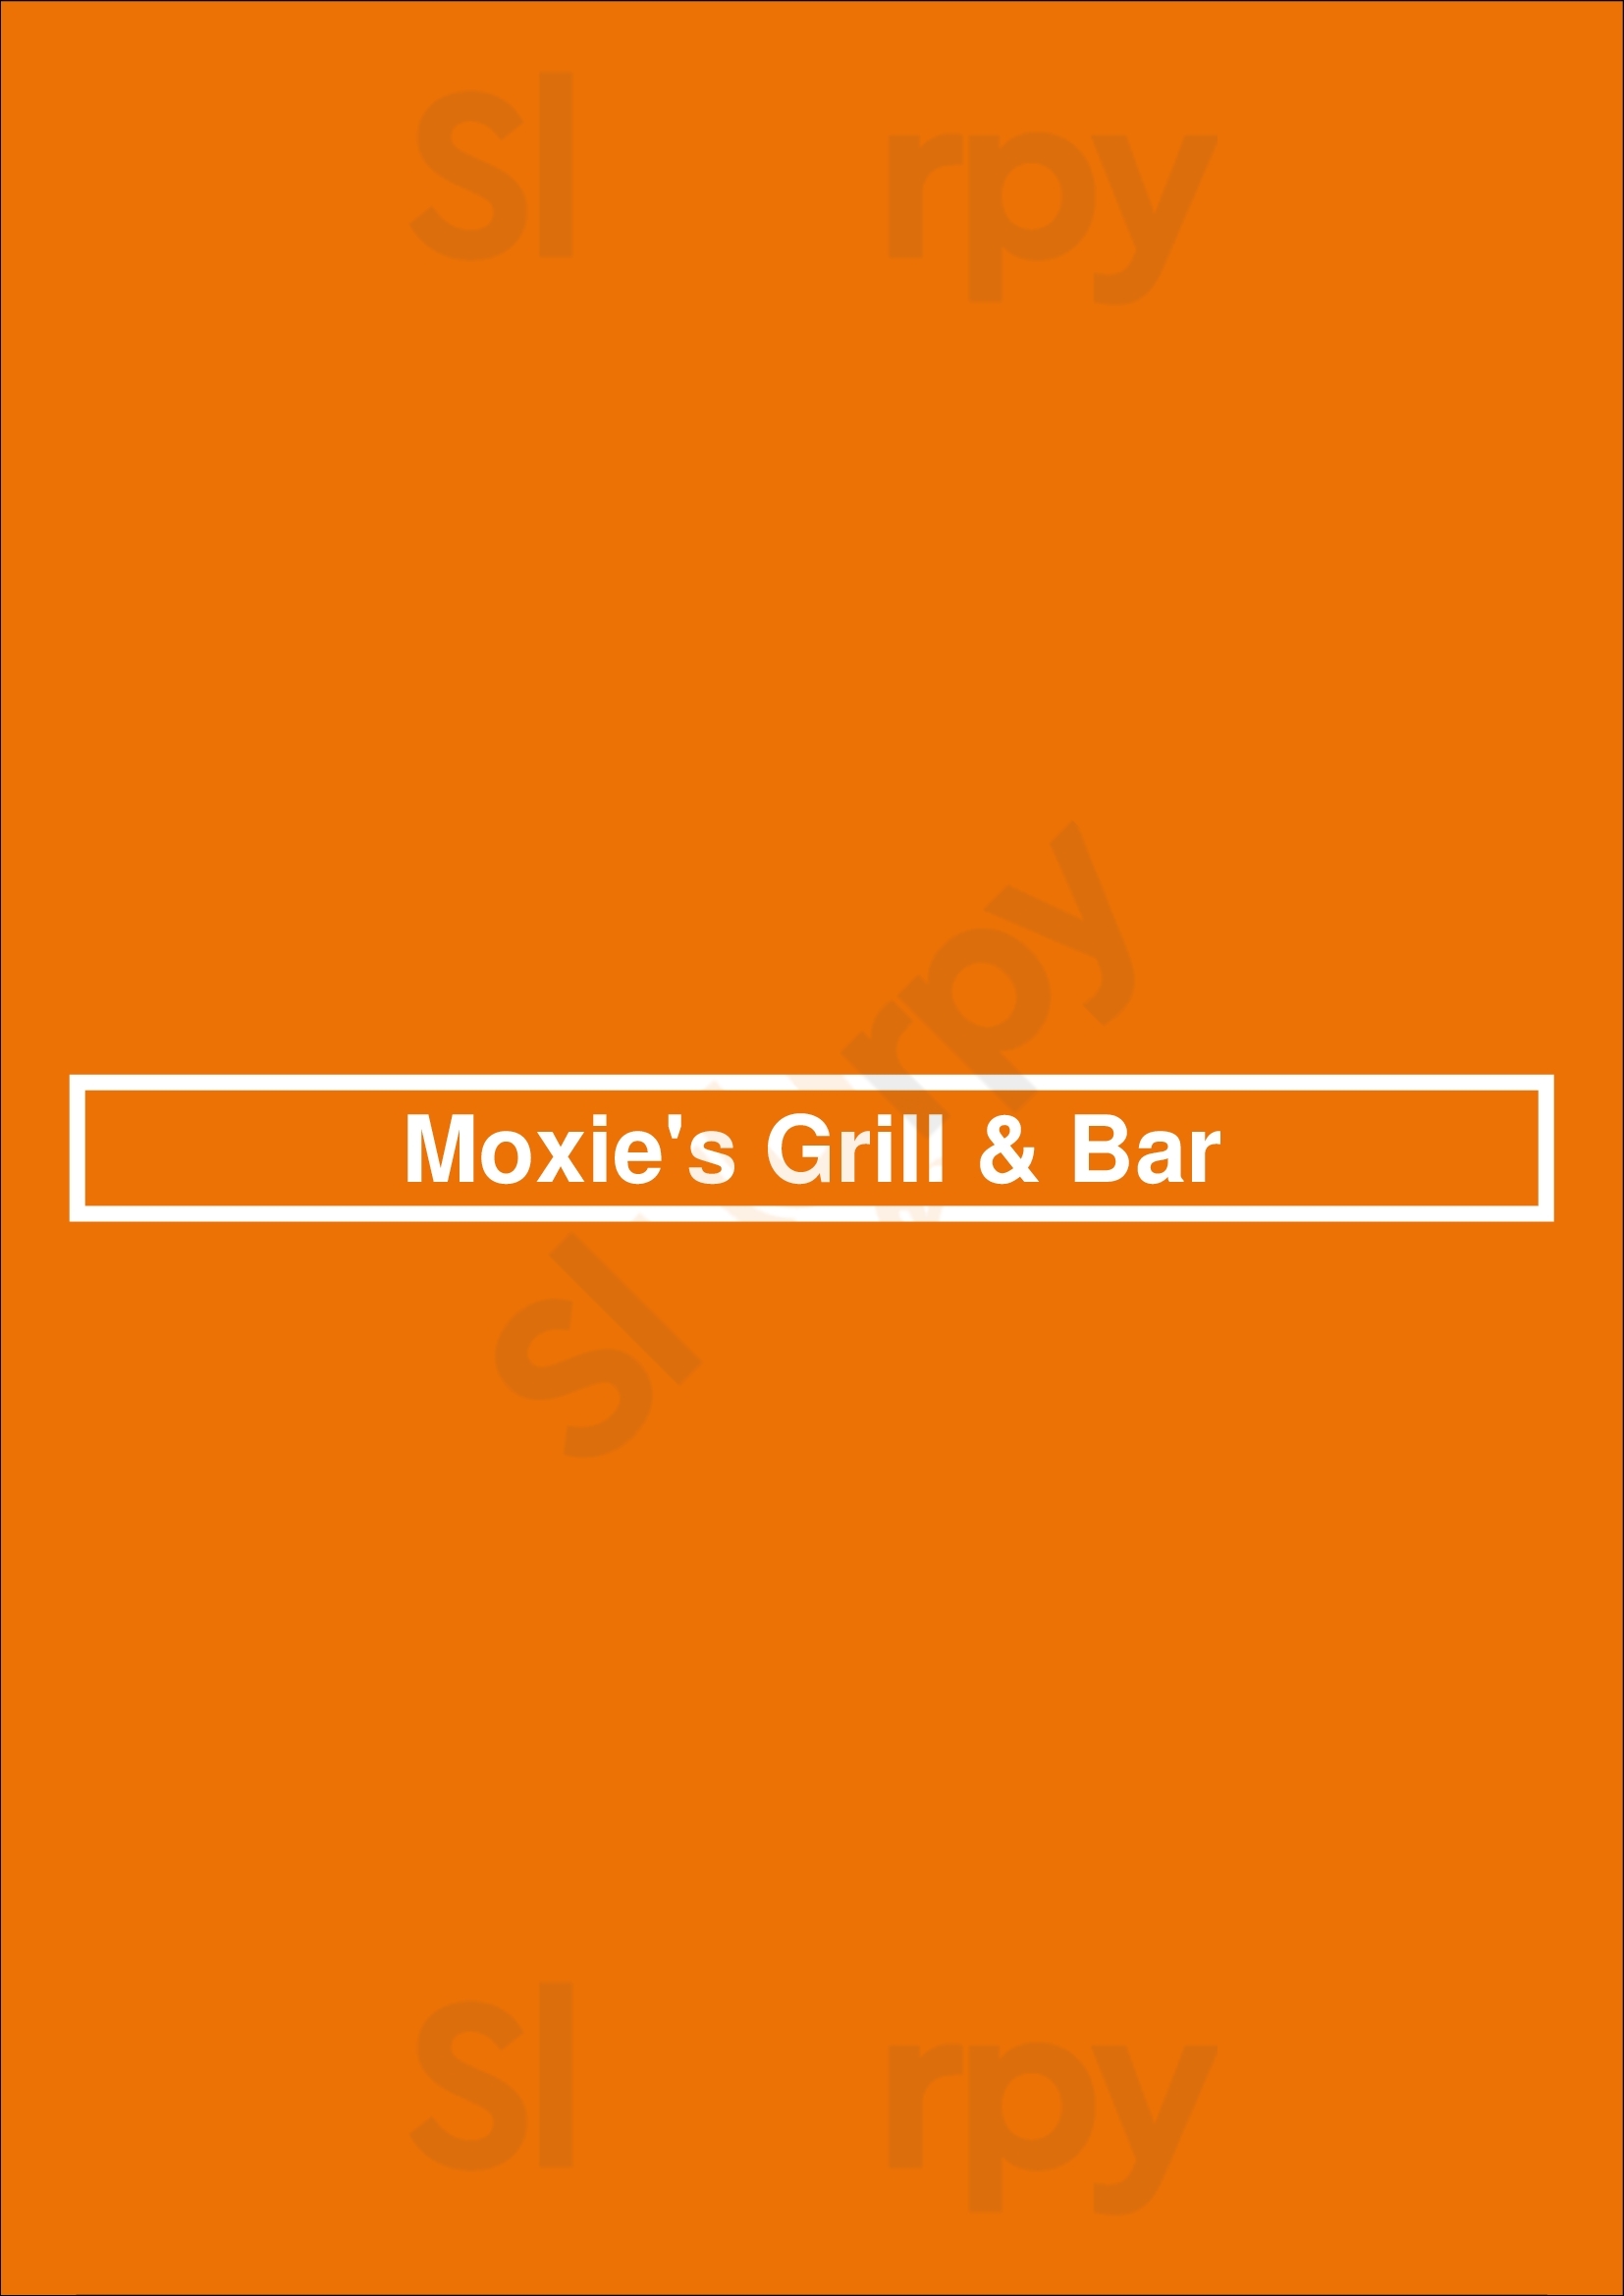 Moxie's Grill & Bar Abbotsford Menu - 1